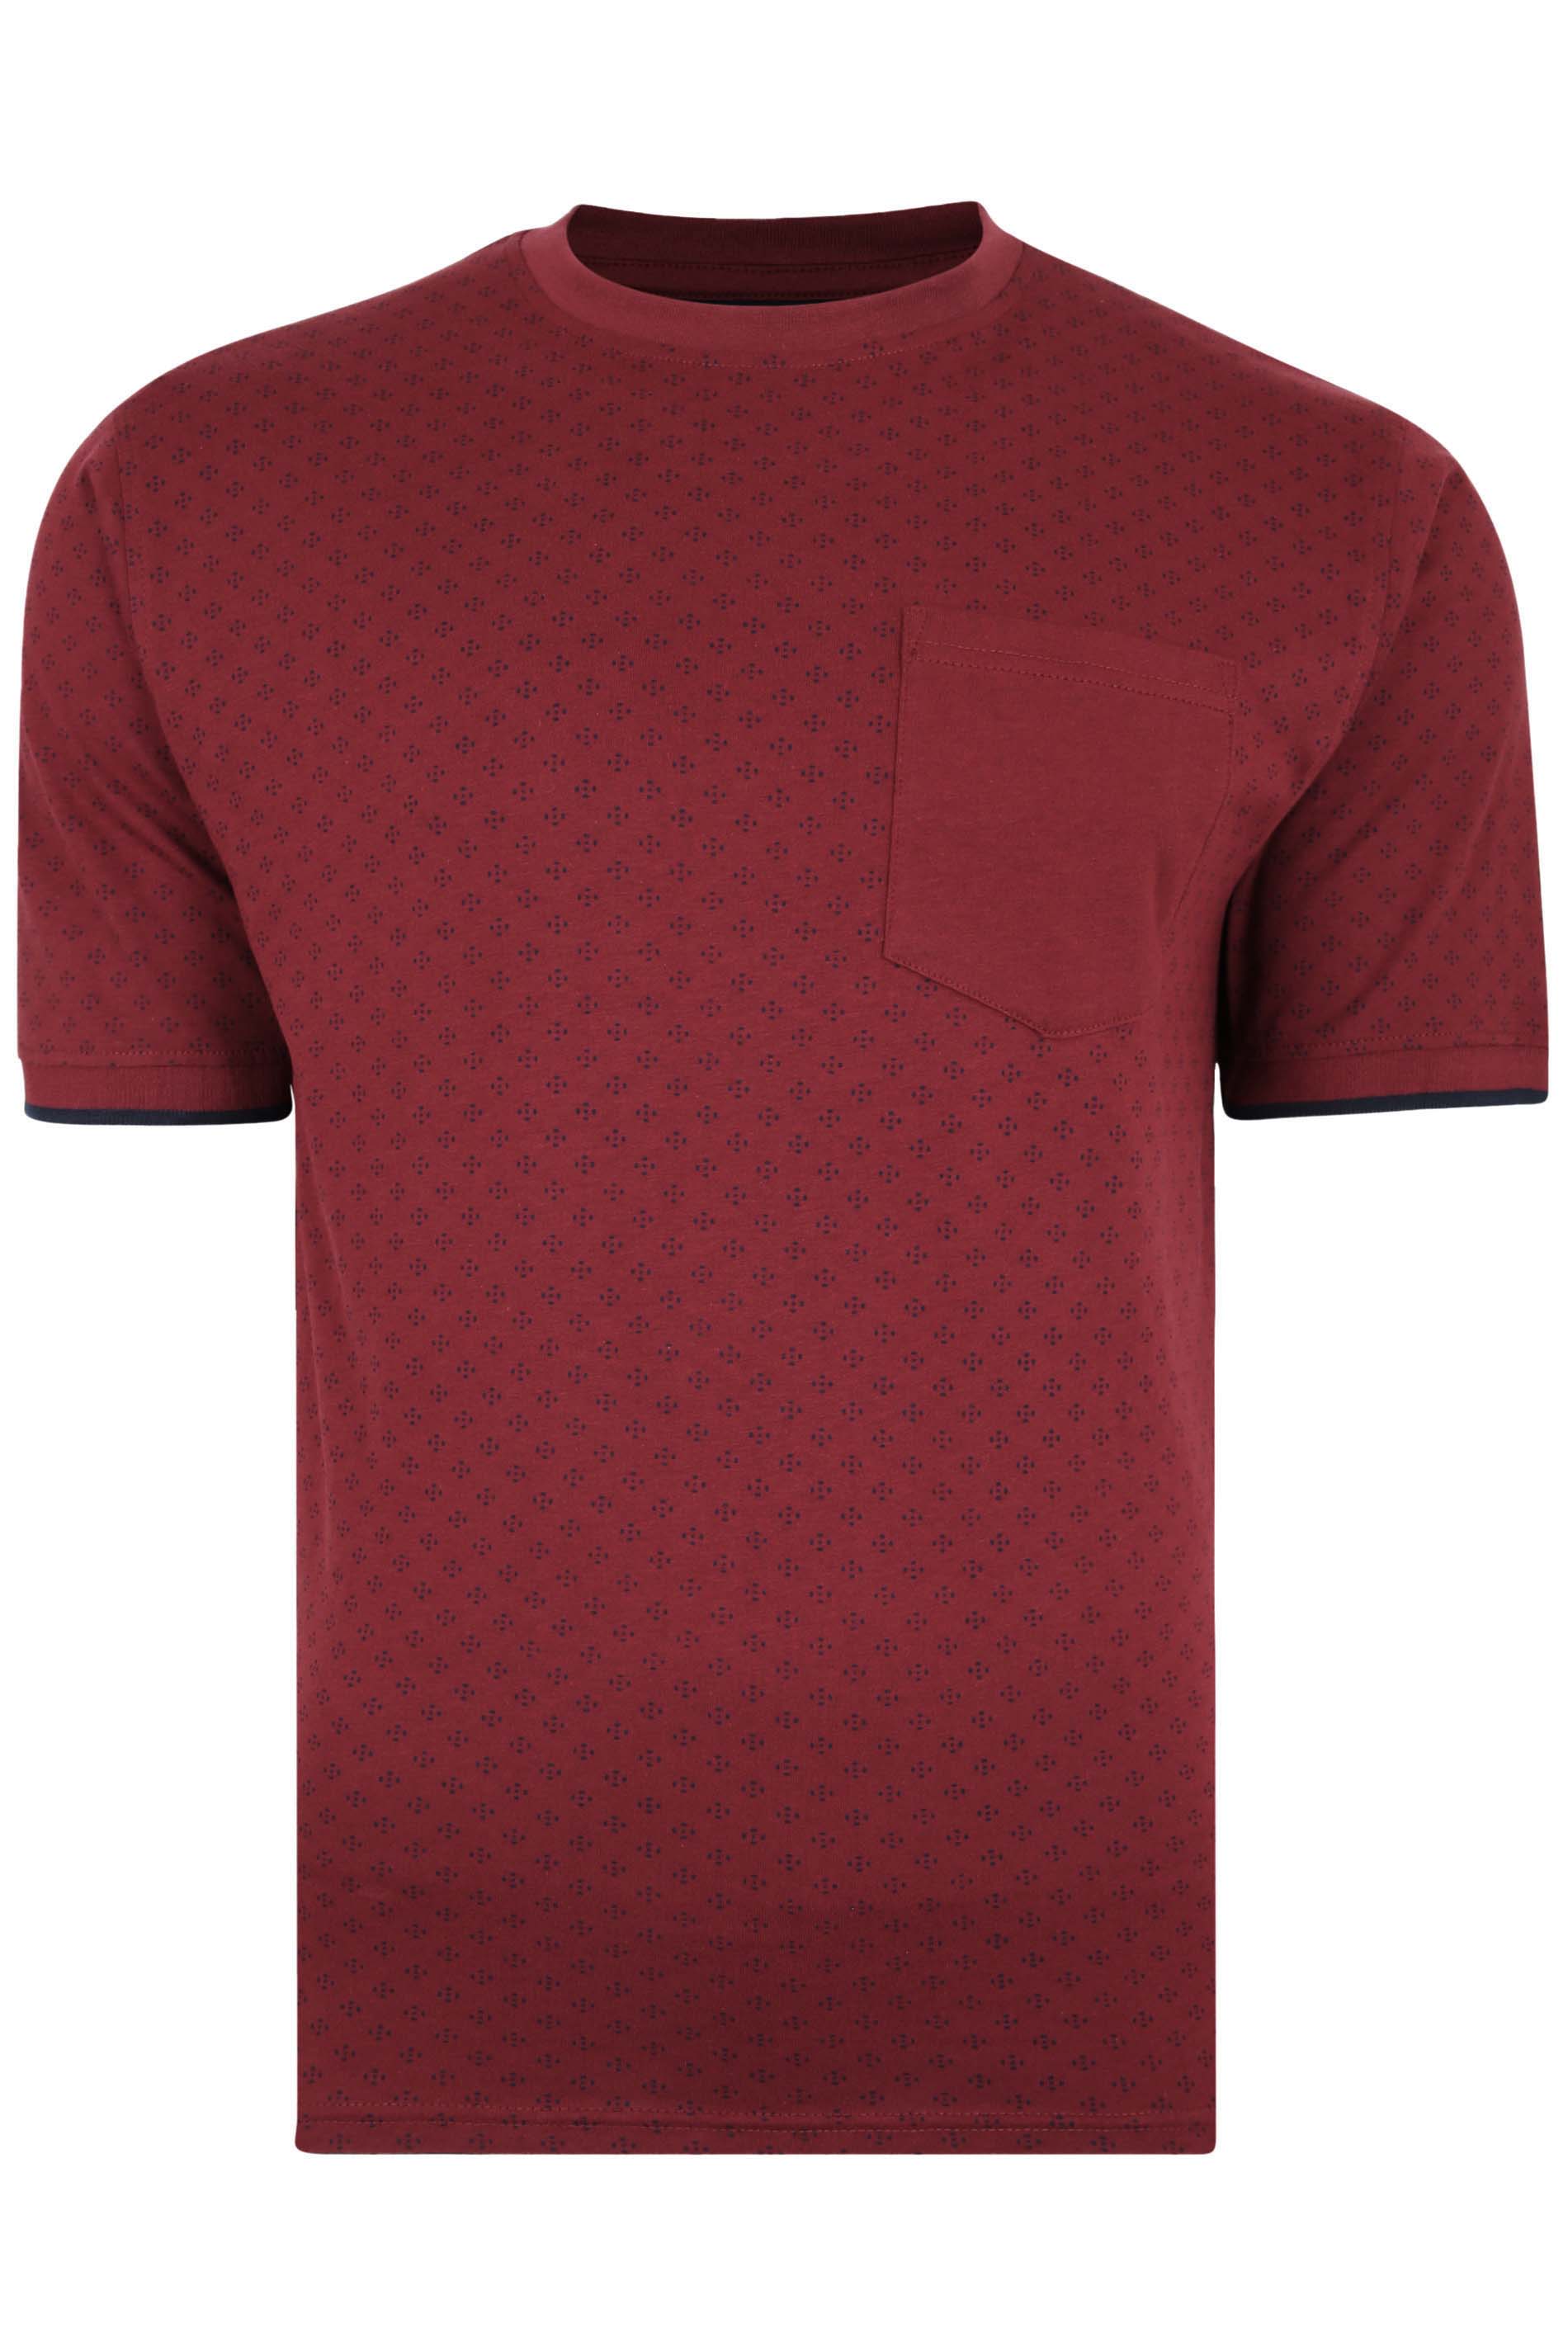 KAM Big & Tall Burgundy Red Dobby Print T-Shirt | BadRhino 2